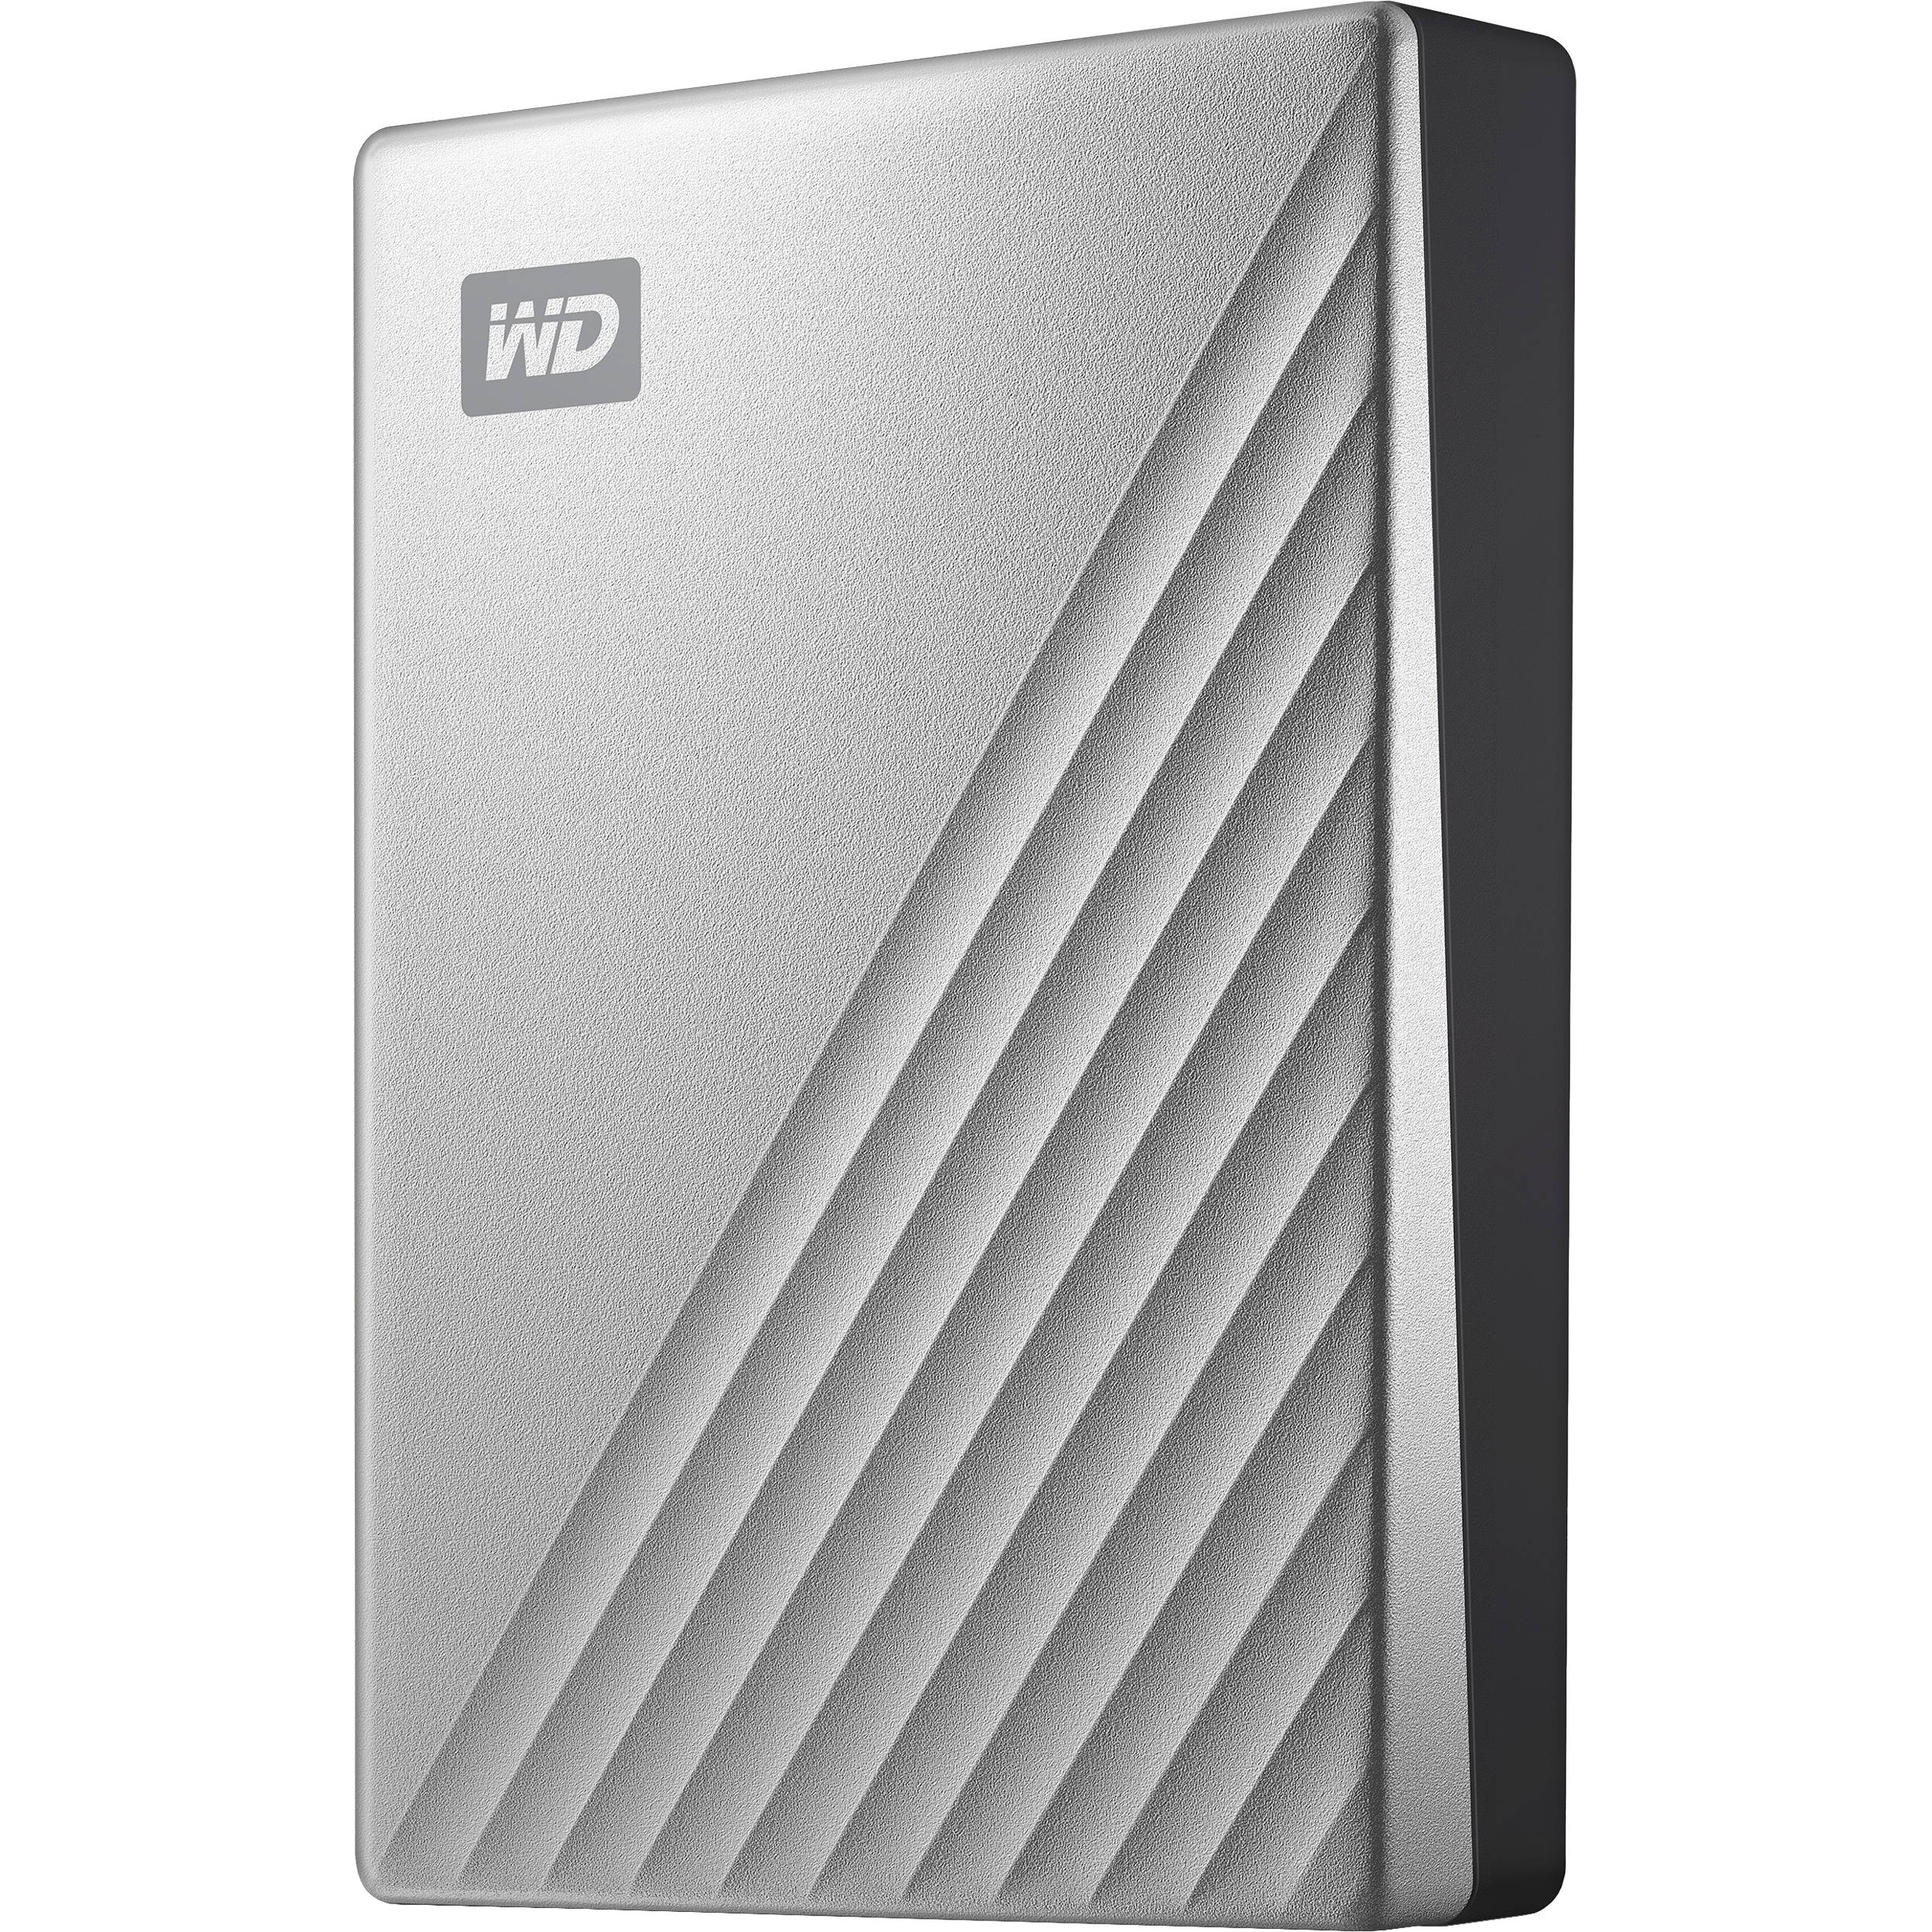 wd 4tb elements portable external hard drive - usb 3.0 - for mac